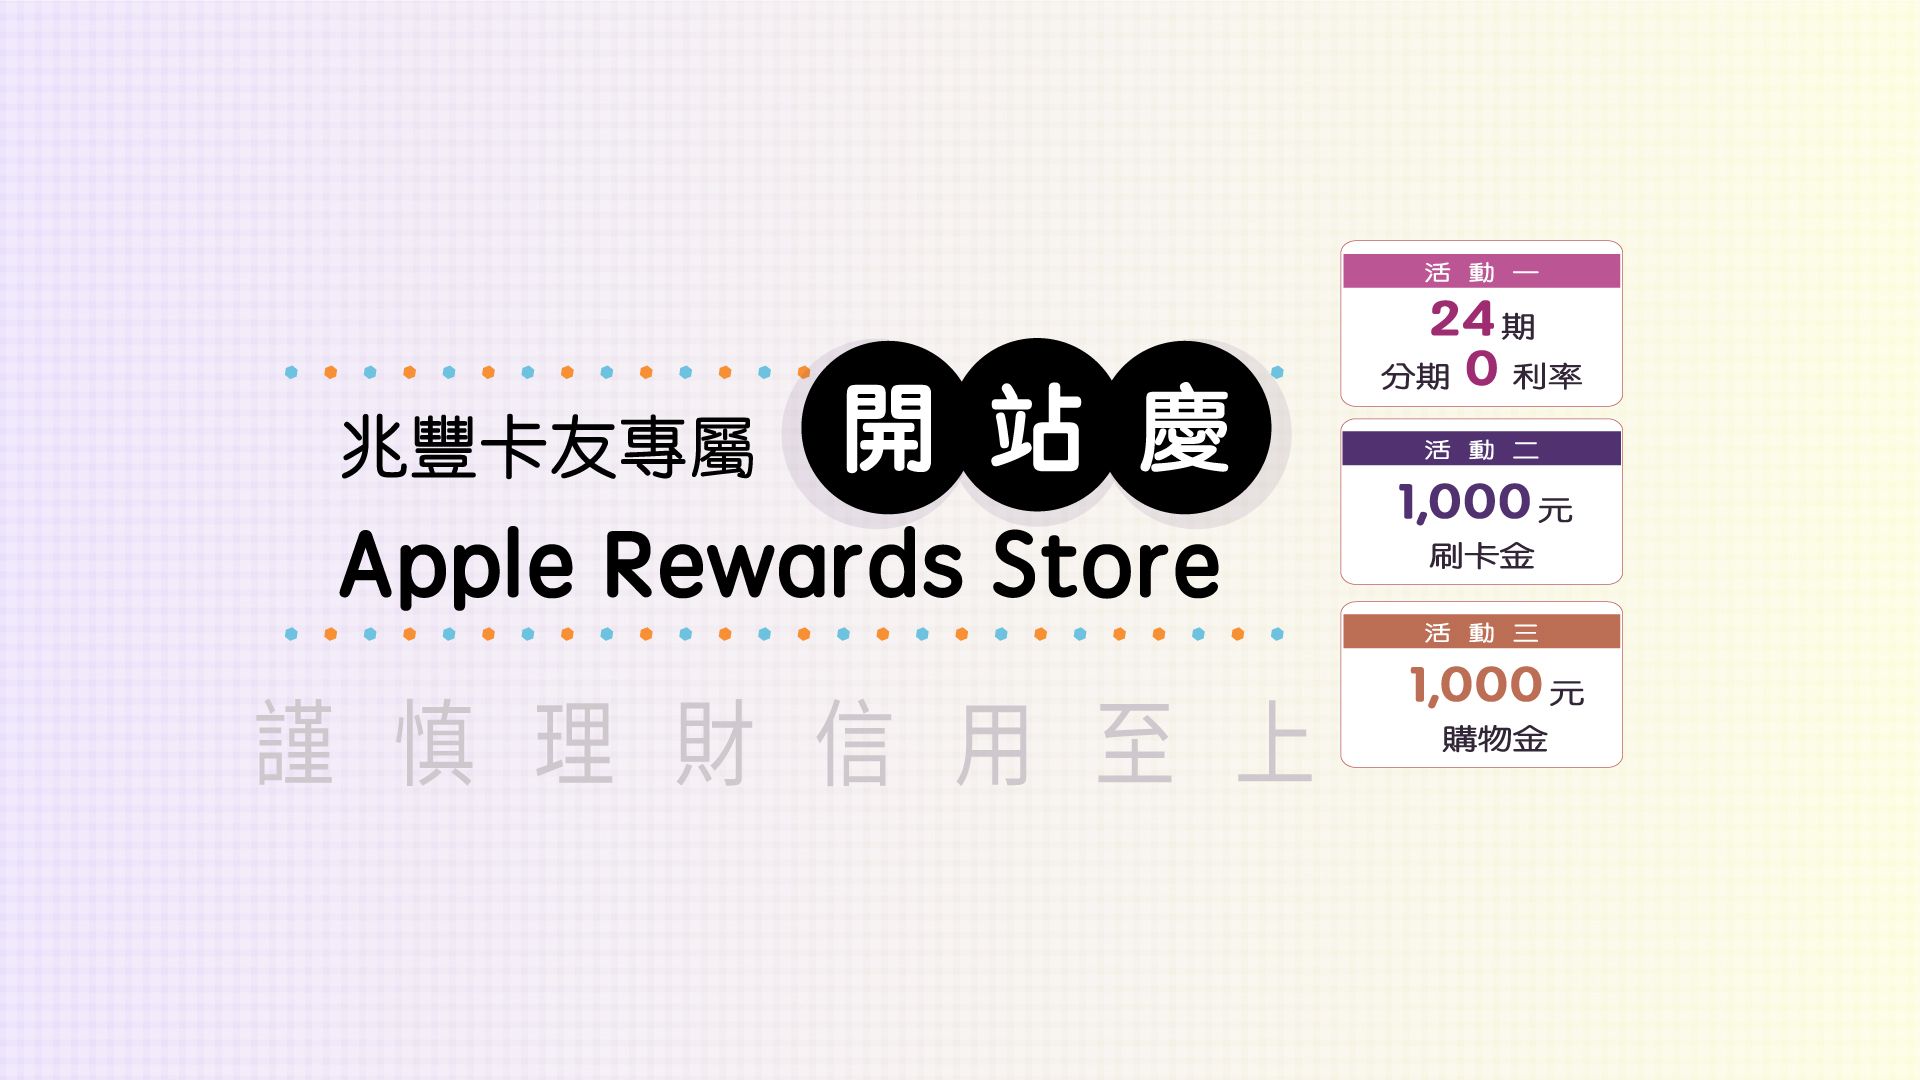 兆豐卡友專屬 Apple Rewards Store 開幕慶